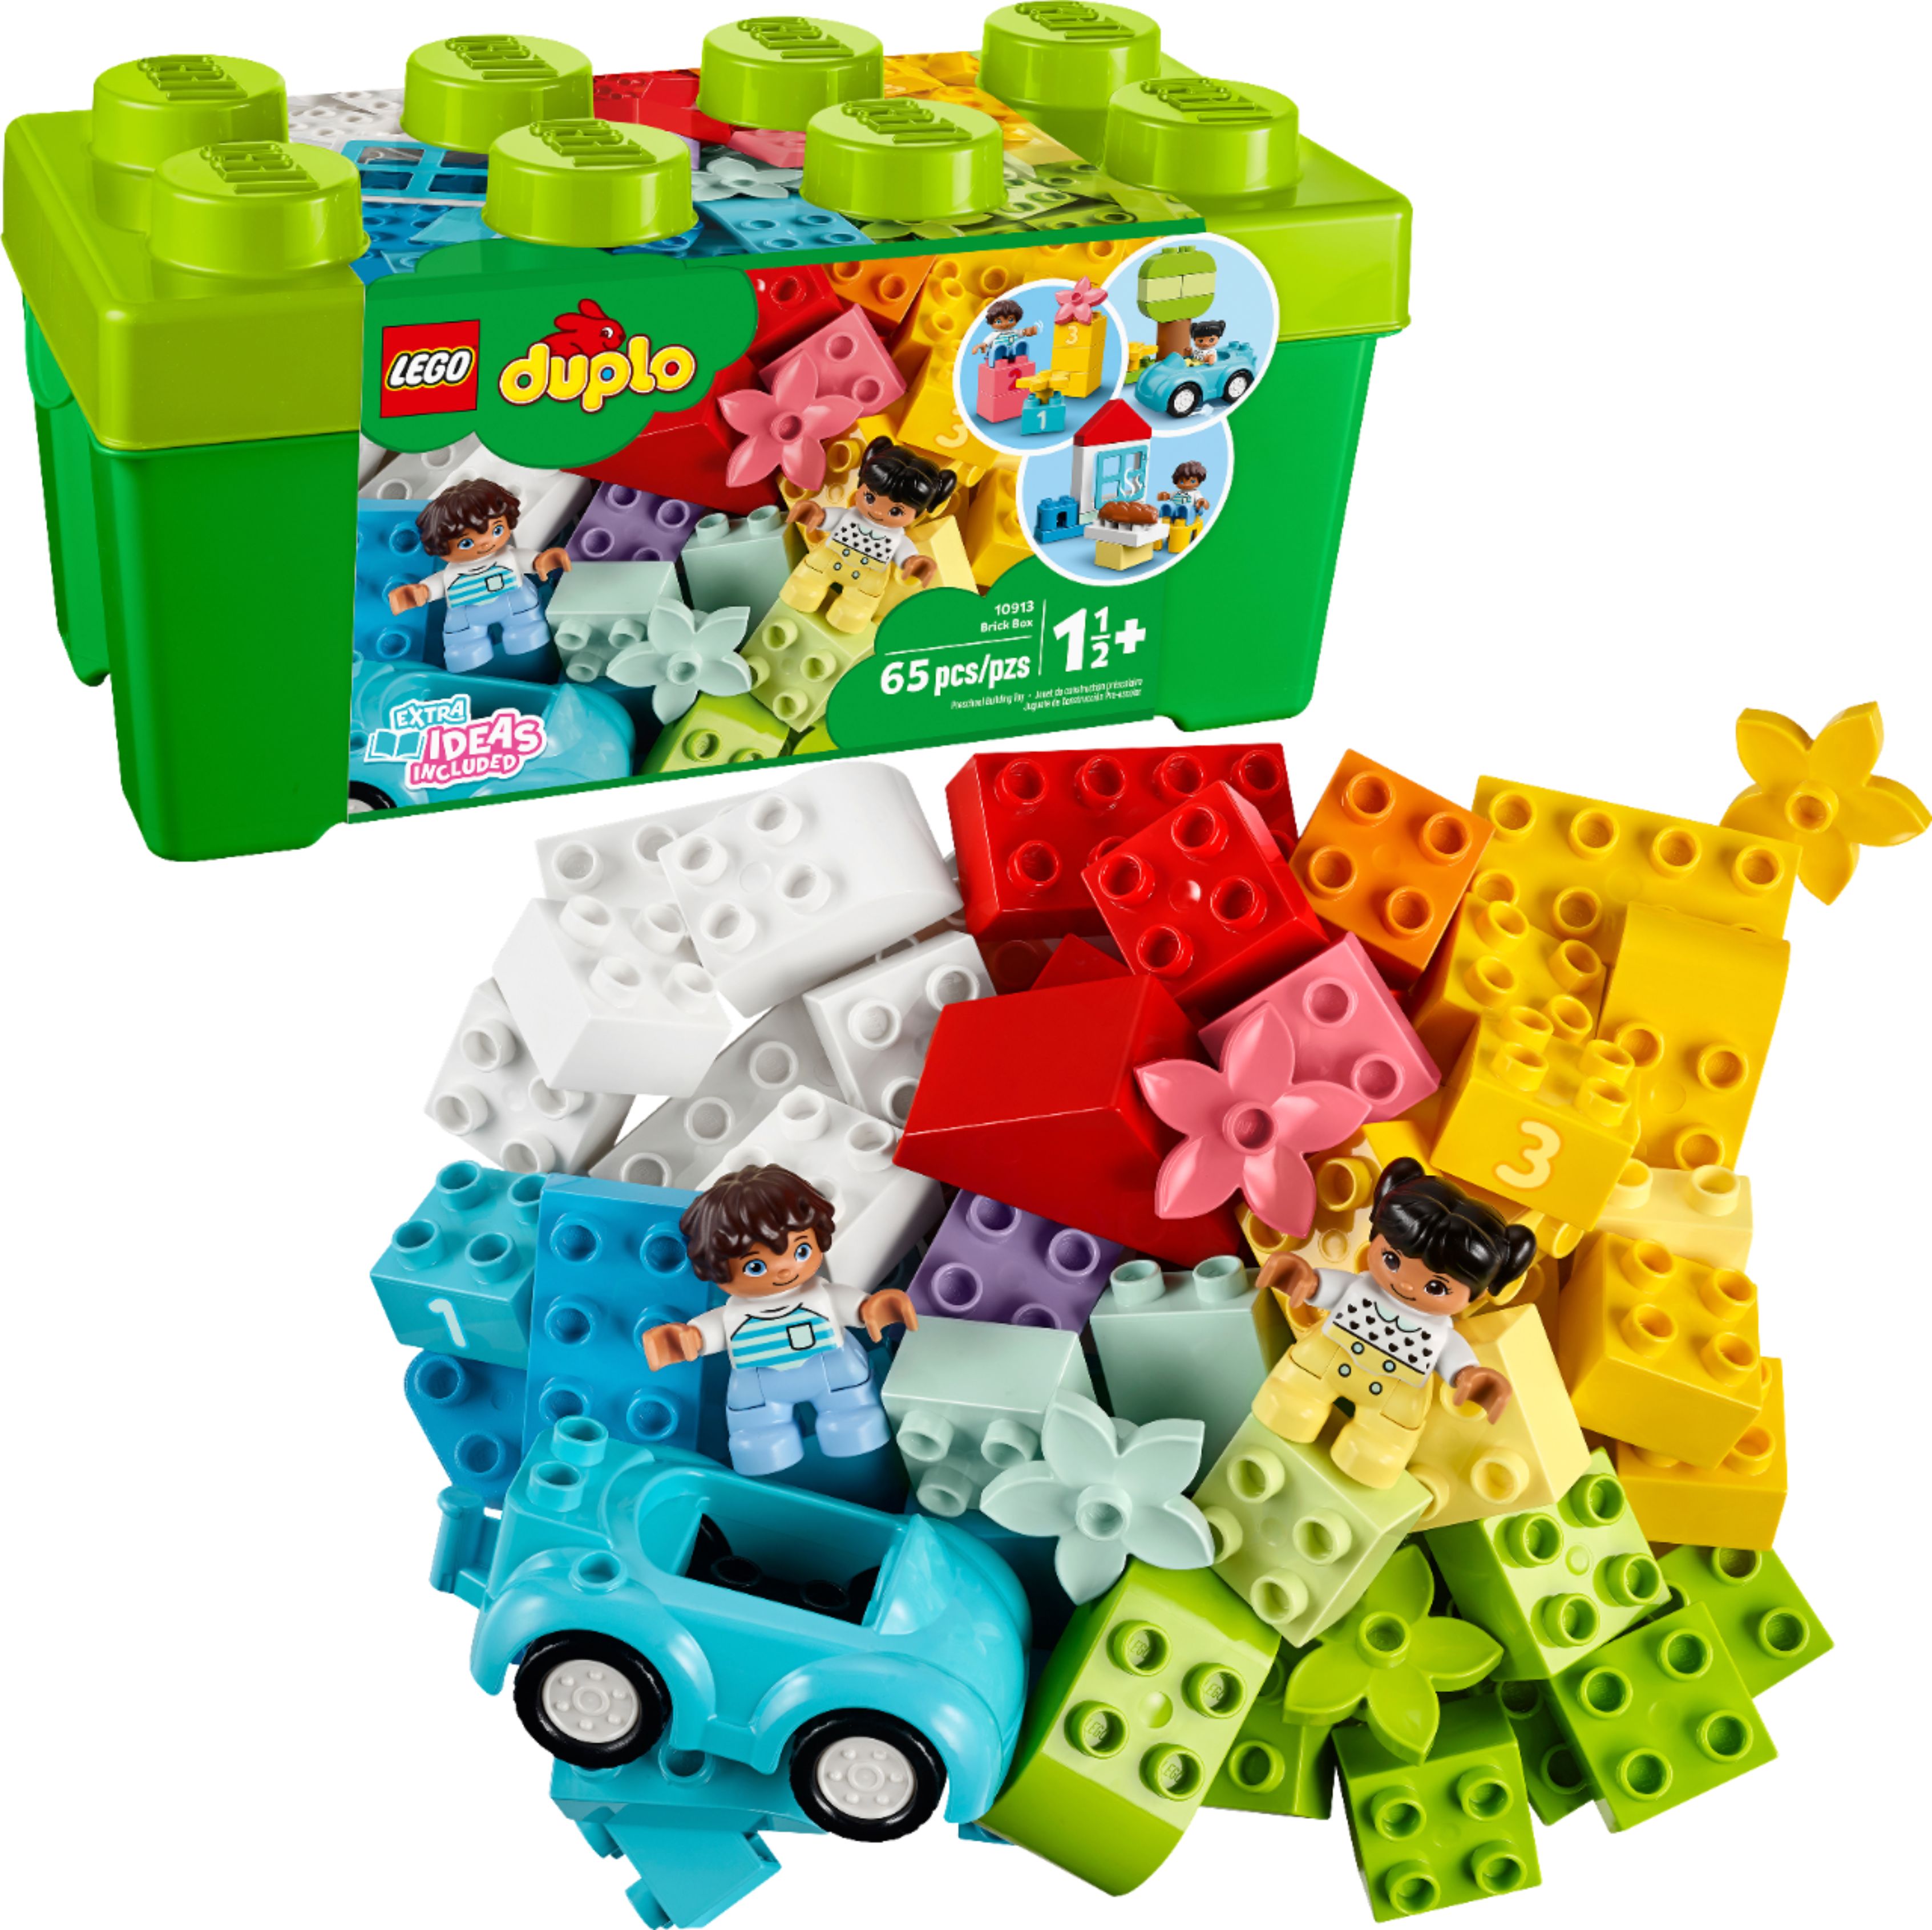 LEGO DUPLO Box 10913 6288647 - Buy